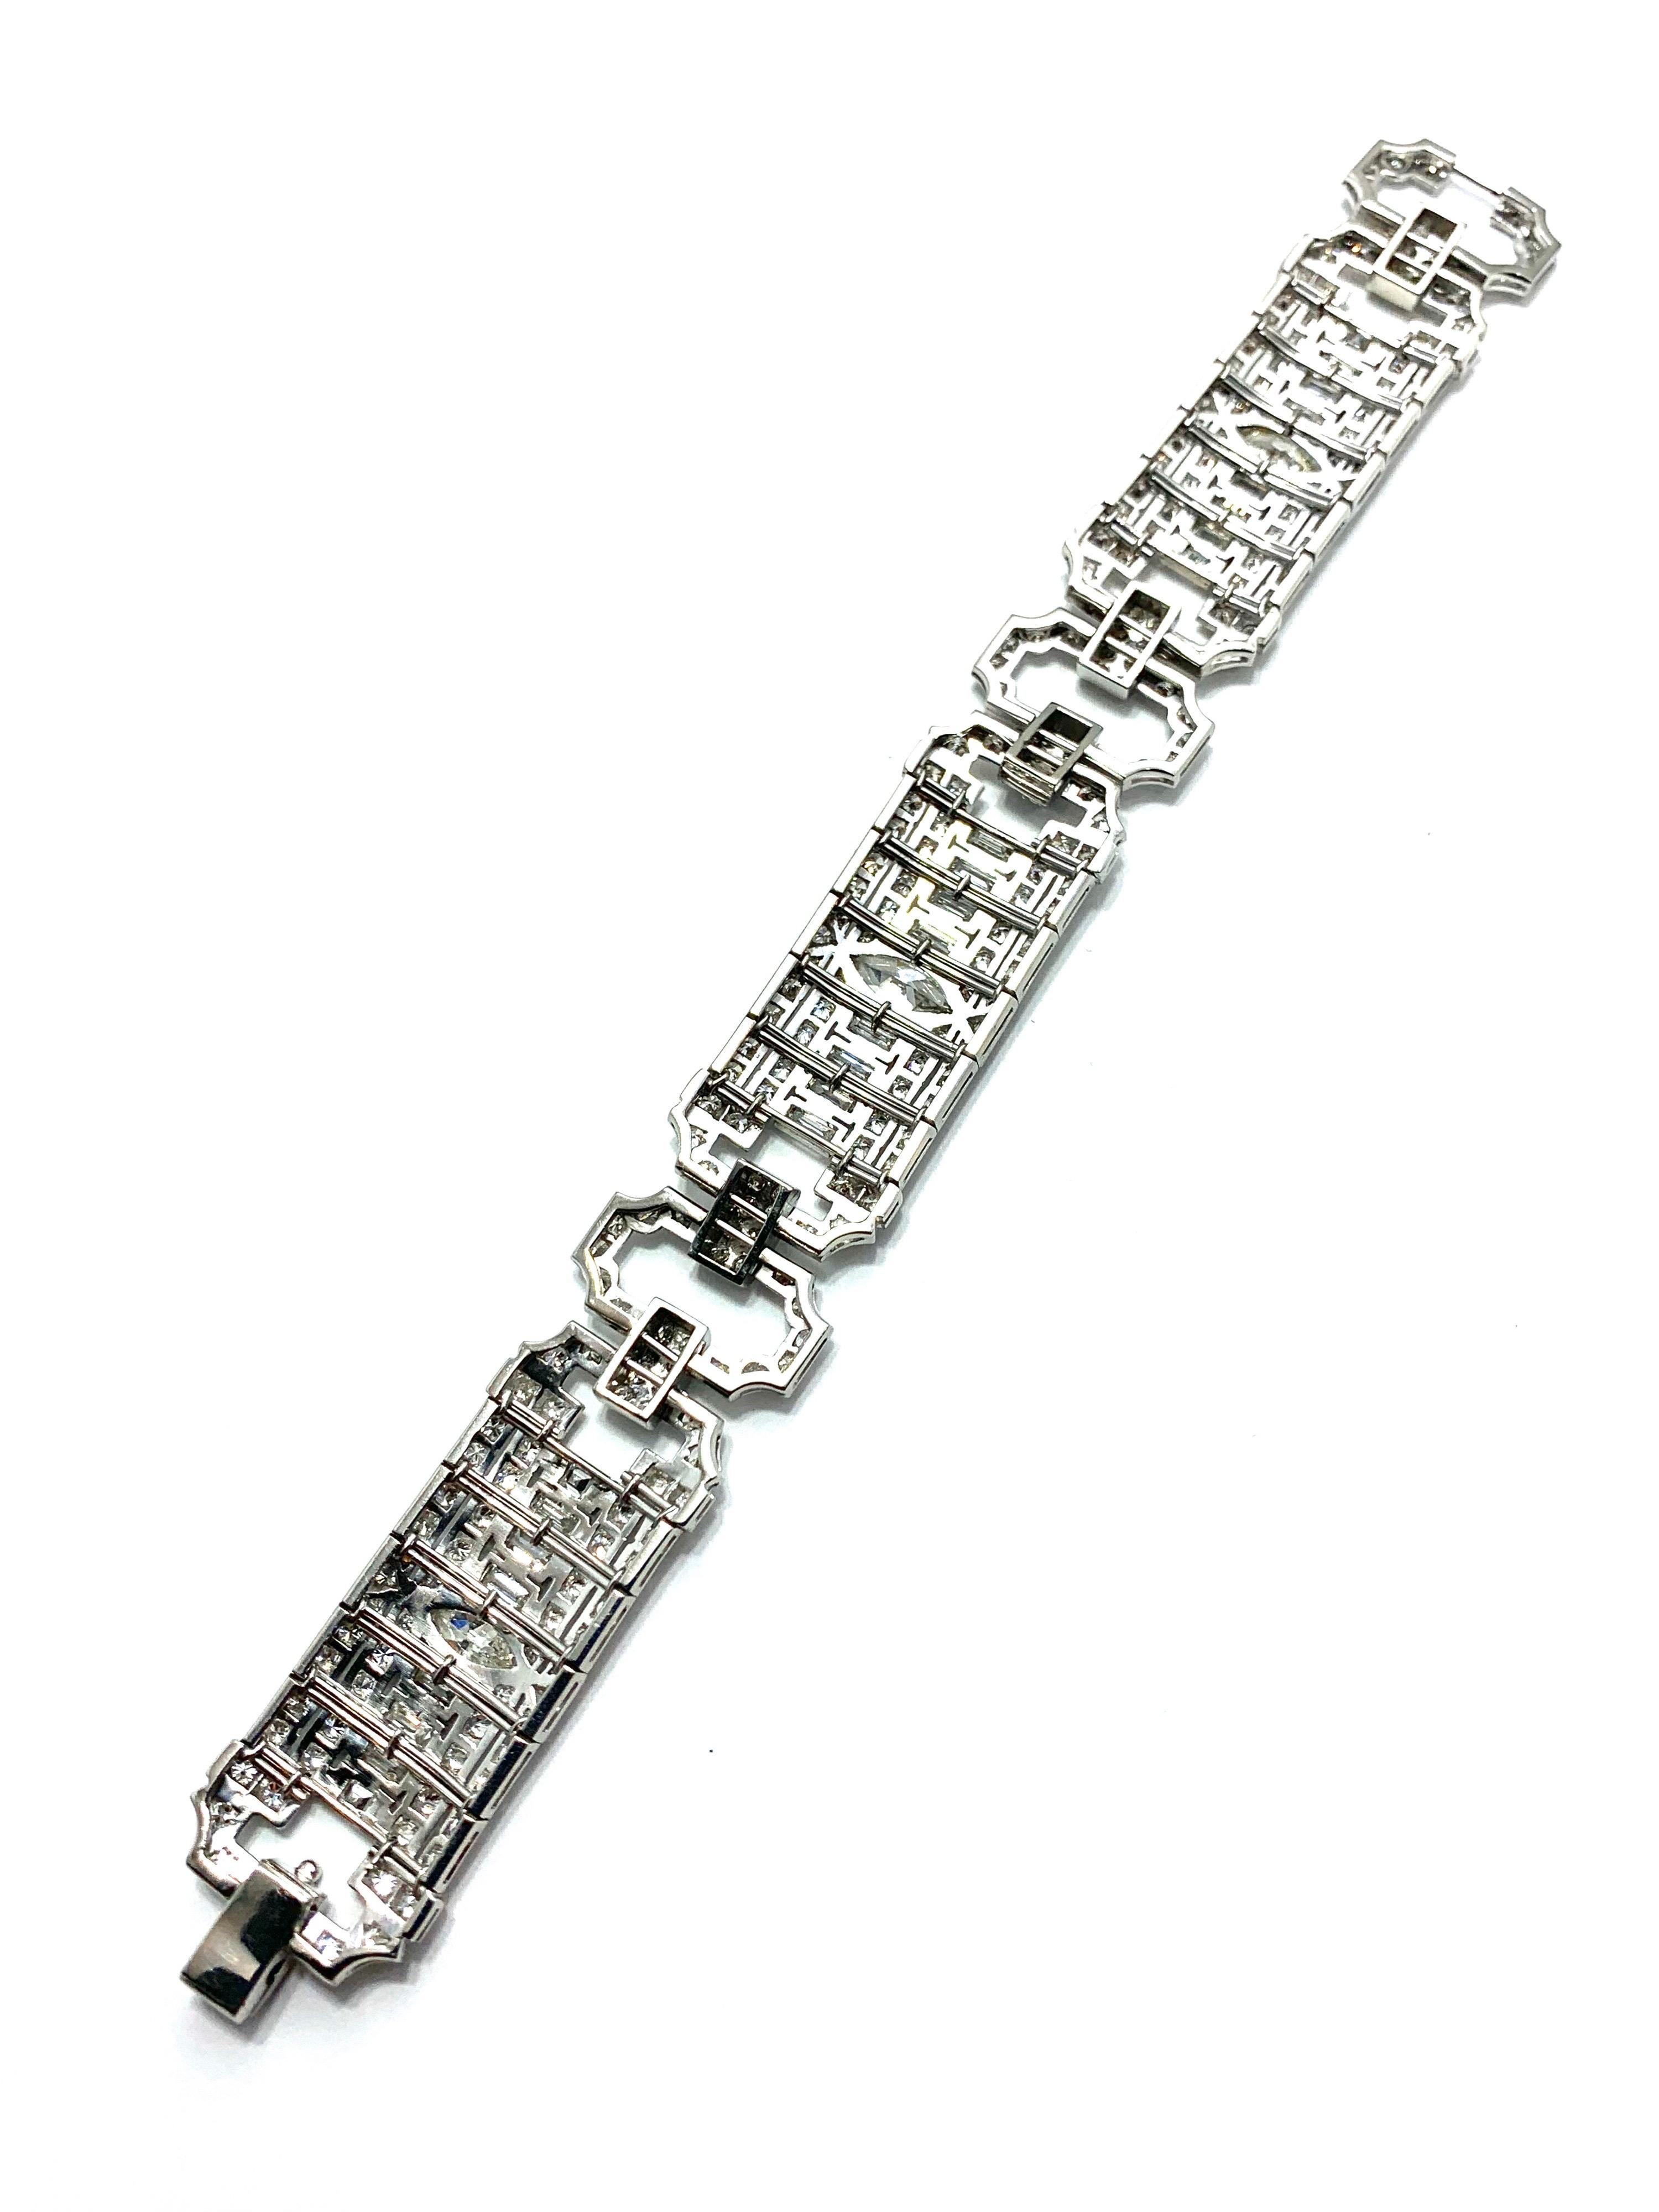 10.25 Carat Art Deco Style Diamond and Platinum Bracelet 4